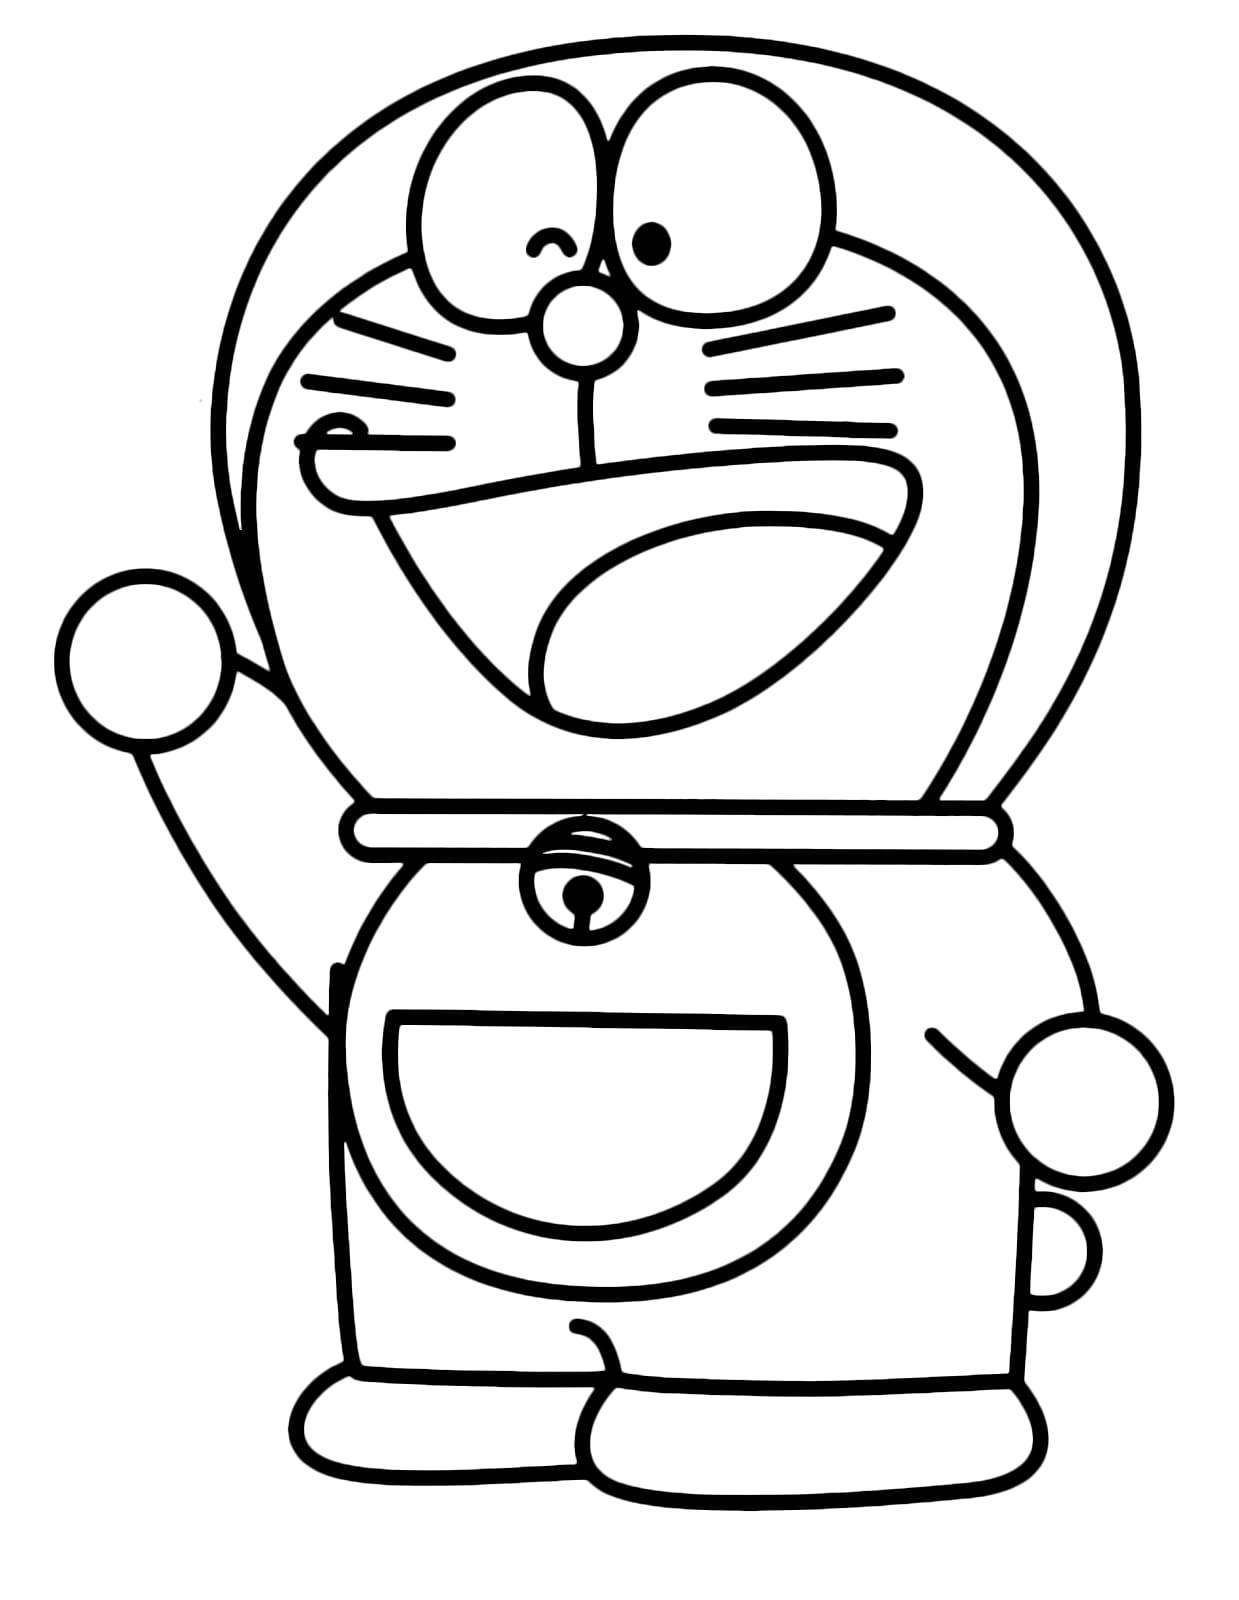 Doraemon-Ausmalbilder-ausmalbilderkinder.de-18